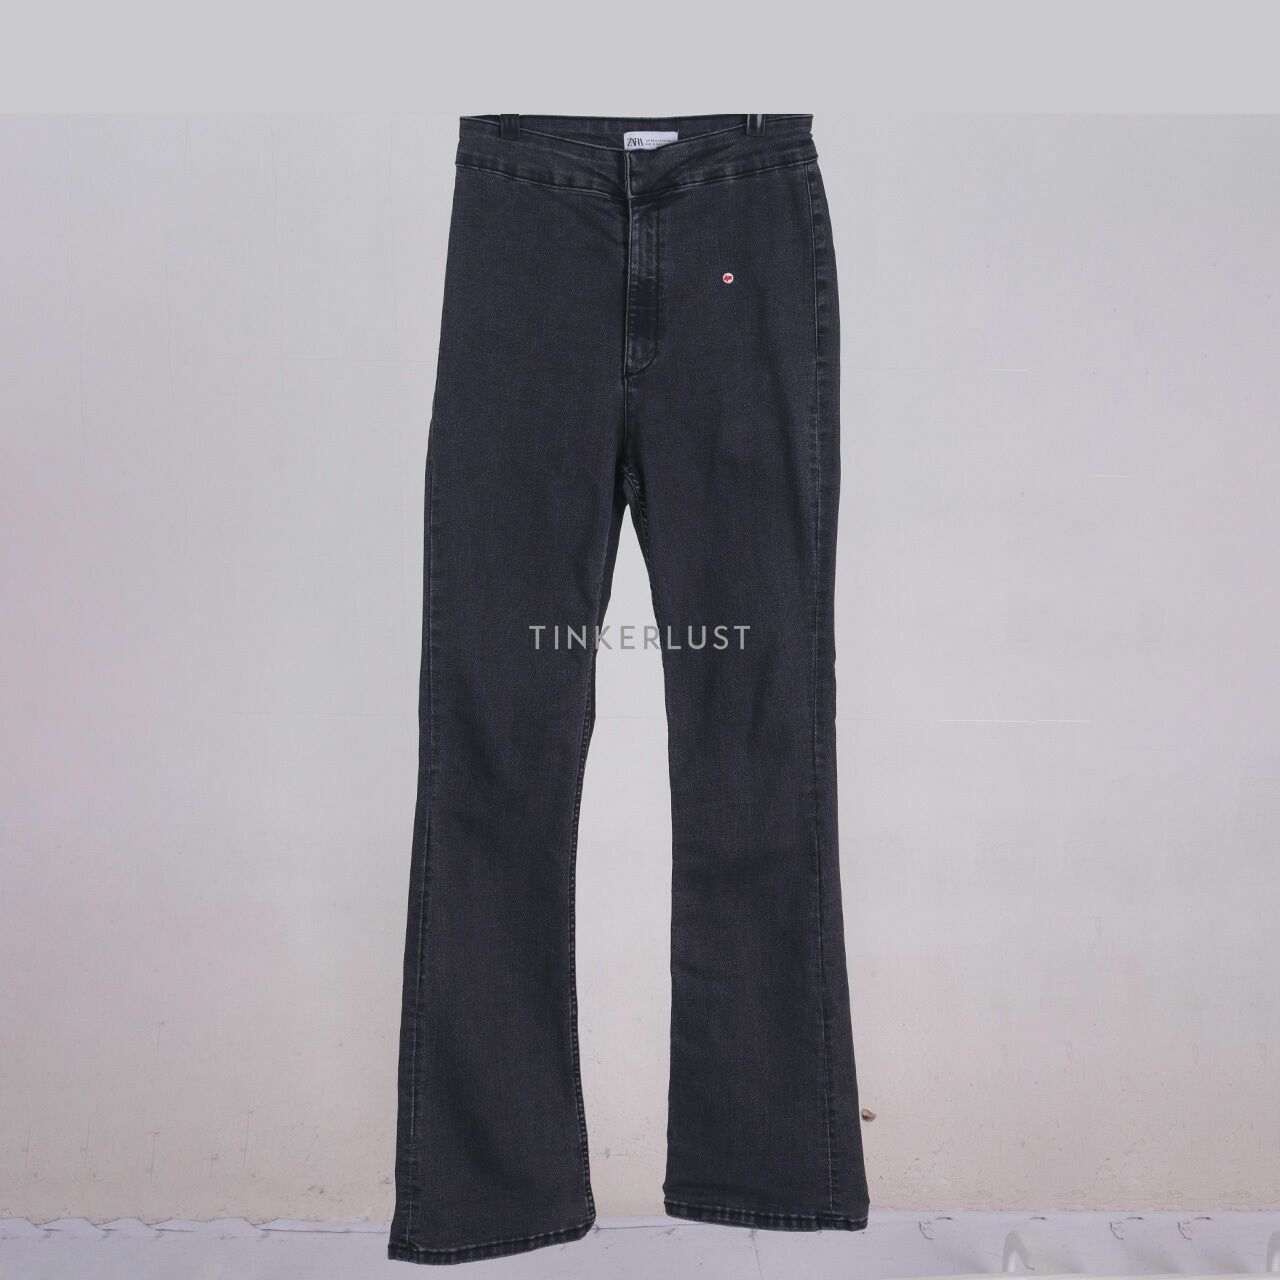 Zara Dark Grey Jeans Long Pants